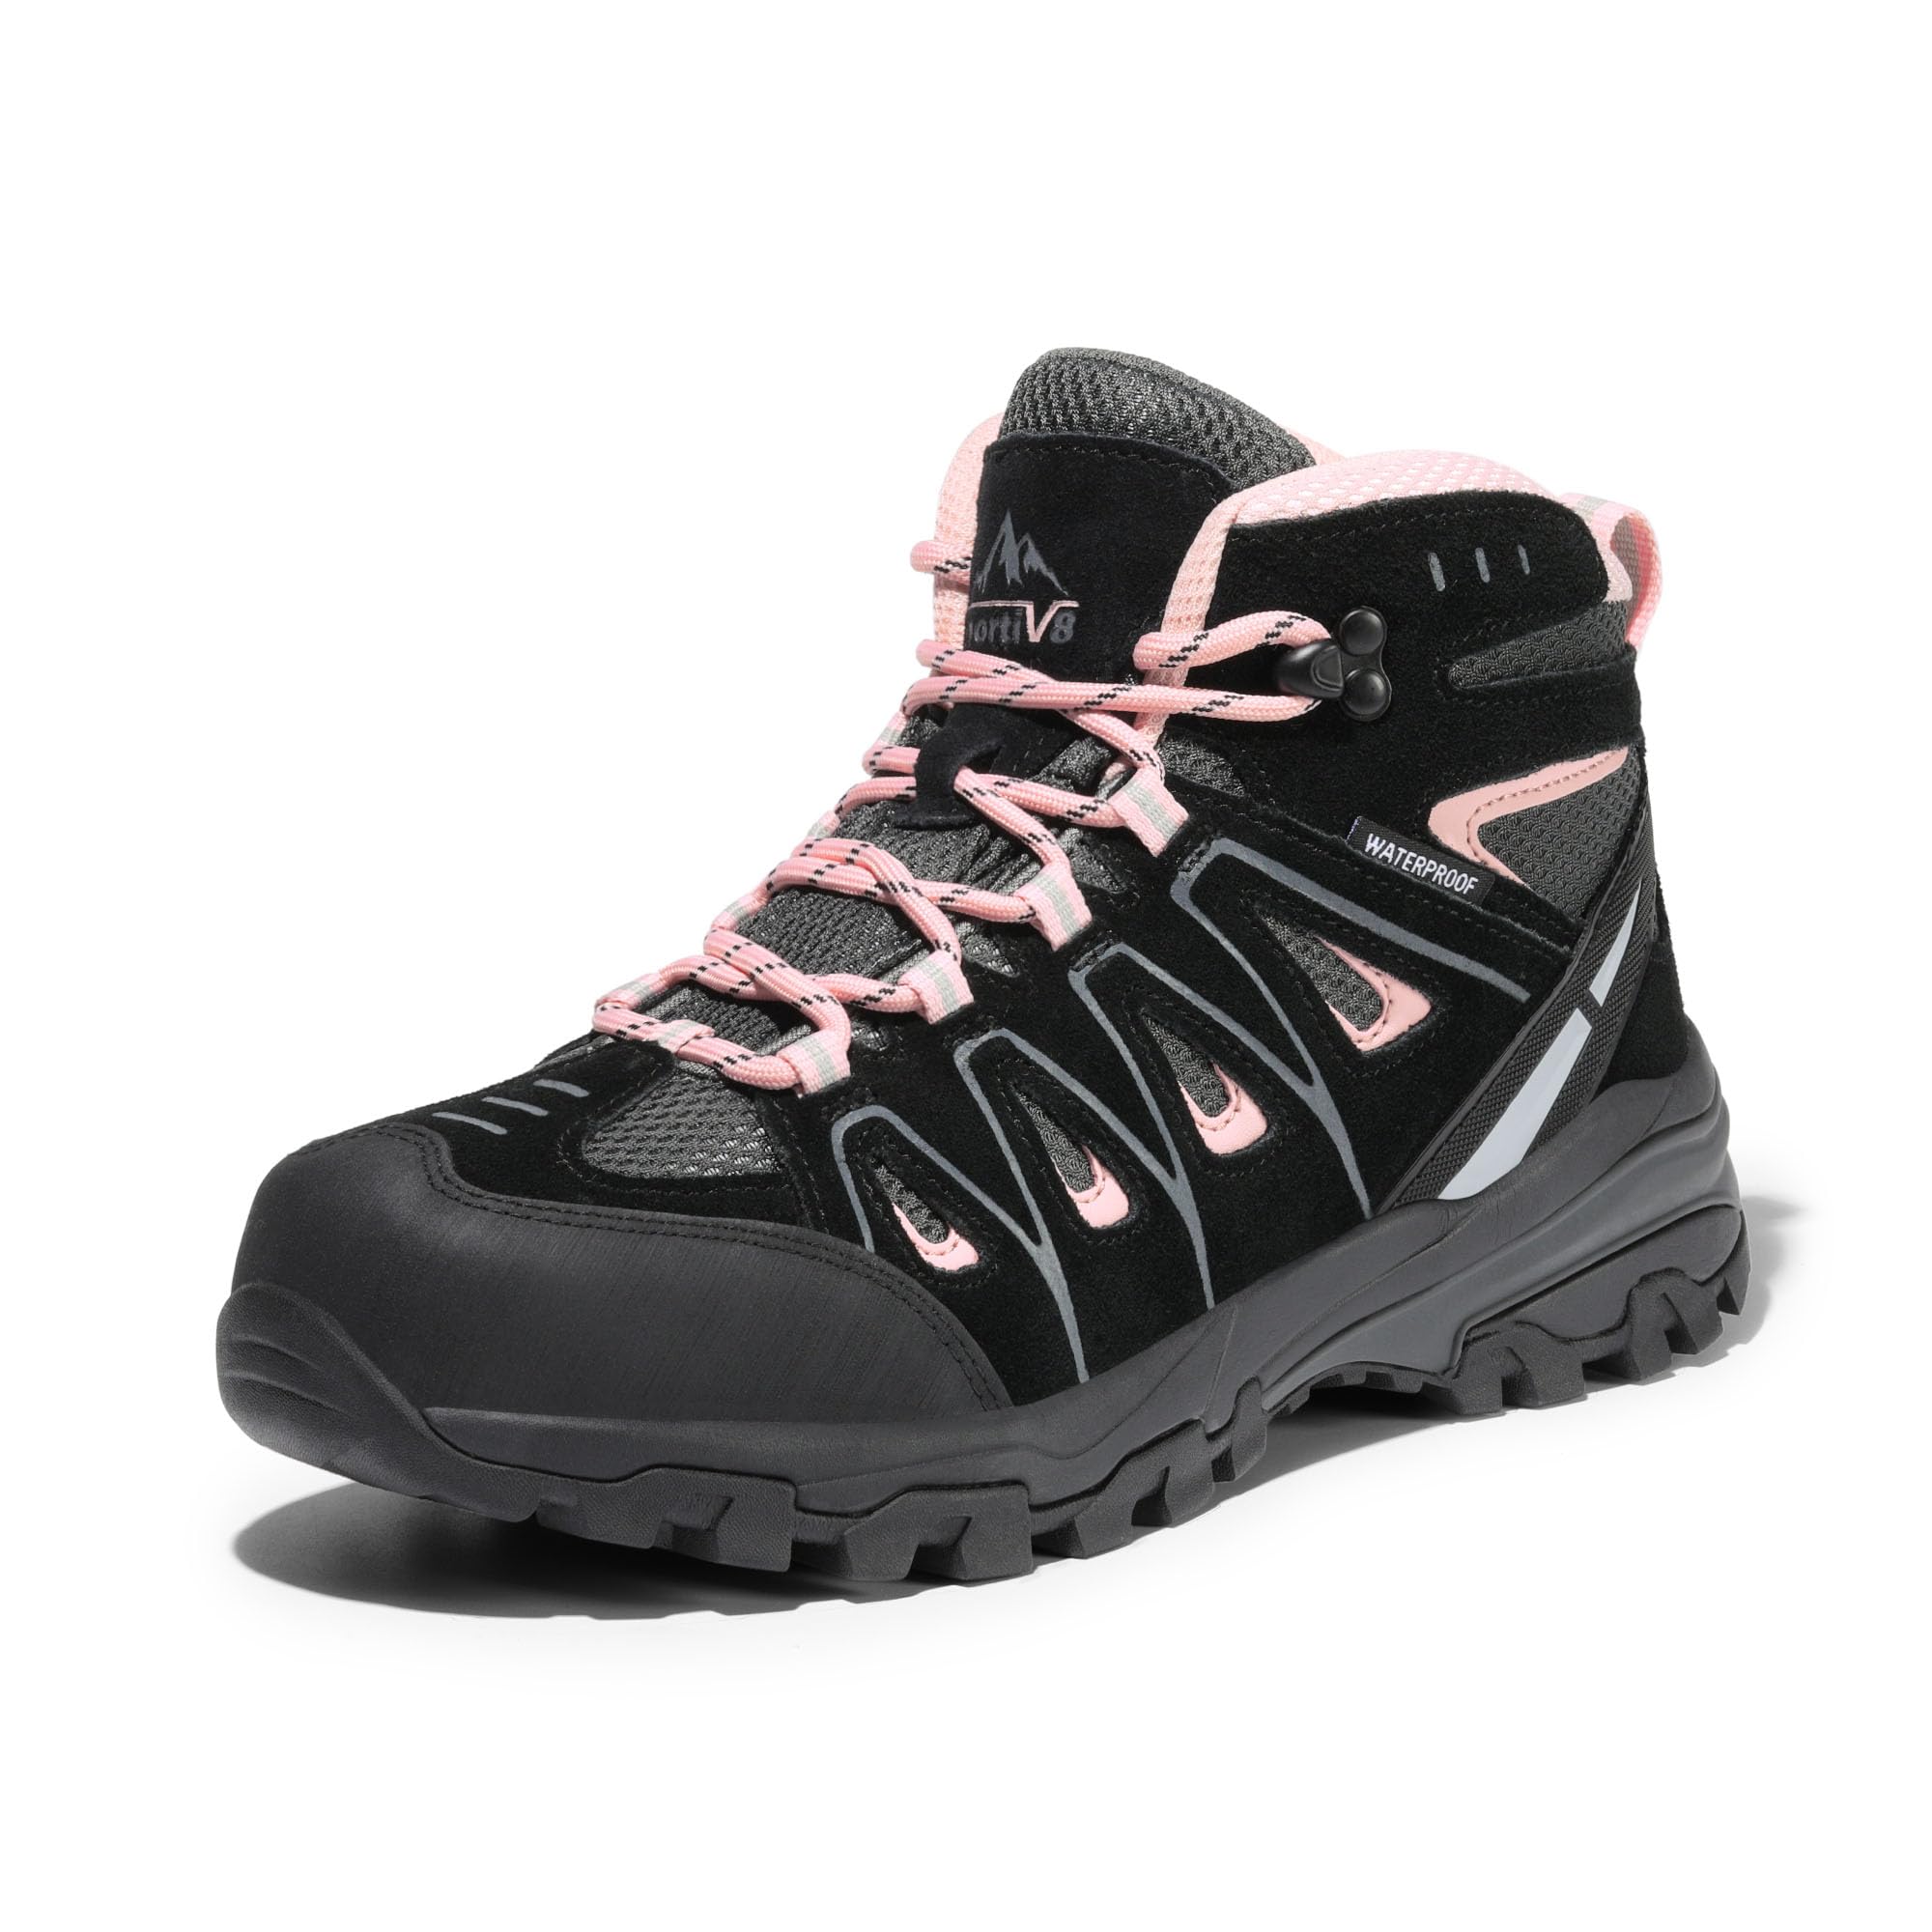 NORTIV 8 Women's Waterproof Hiking Boots Outdoor Trekking Camping Trail Hiking Boots